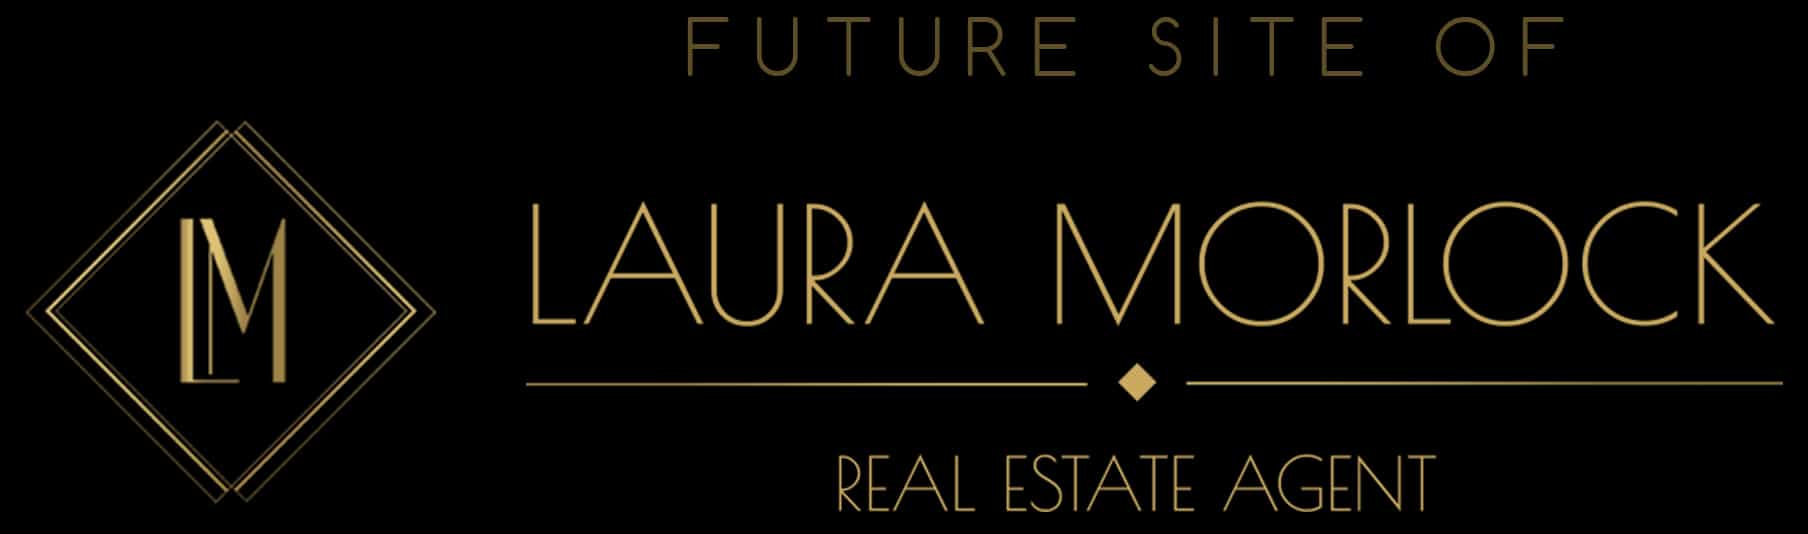 Laura Morlock Real Estate Agent Logo